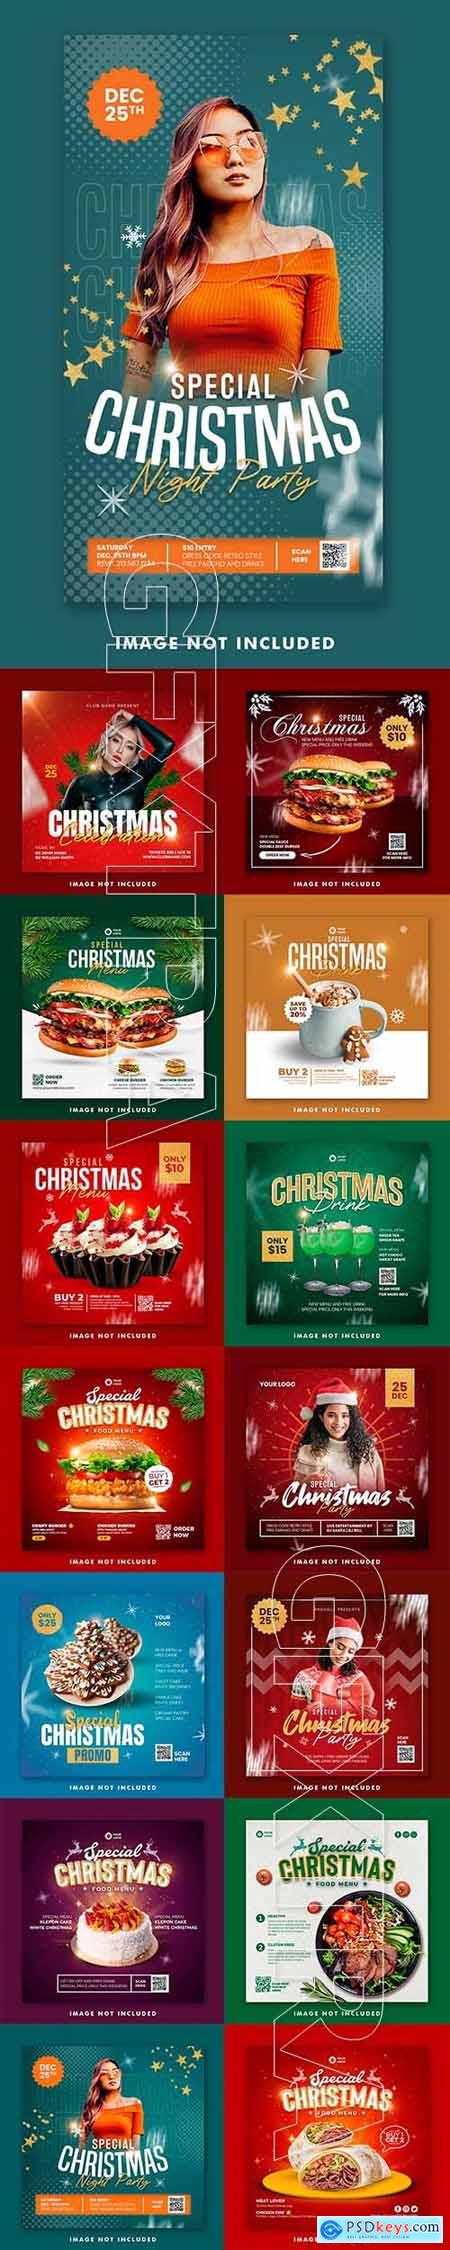 Christmas social media post instagram stories template